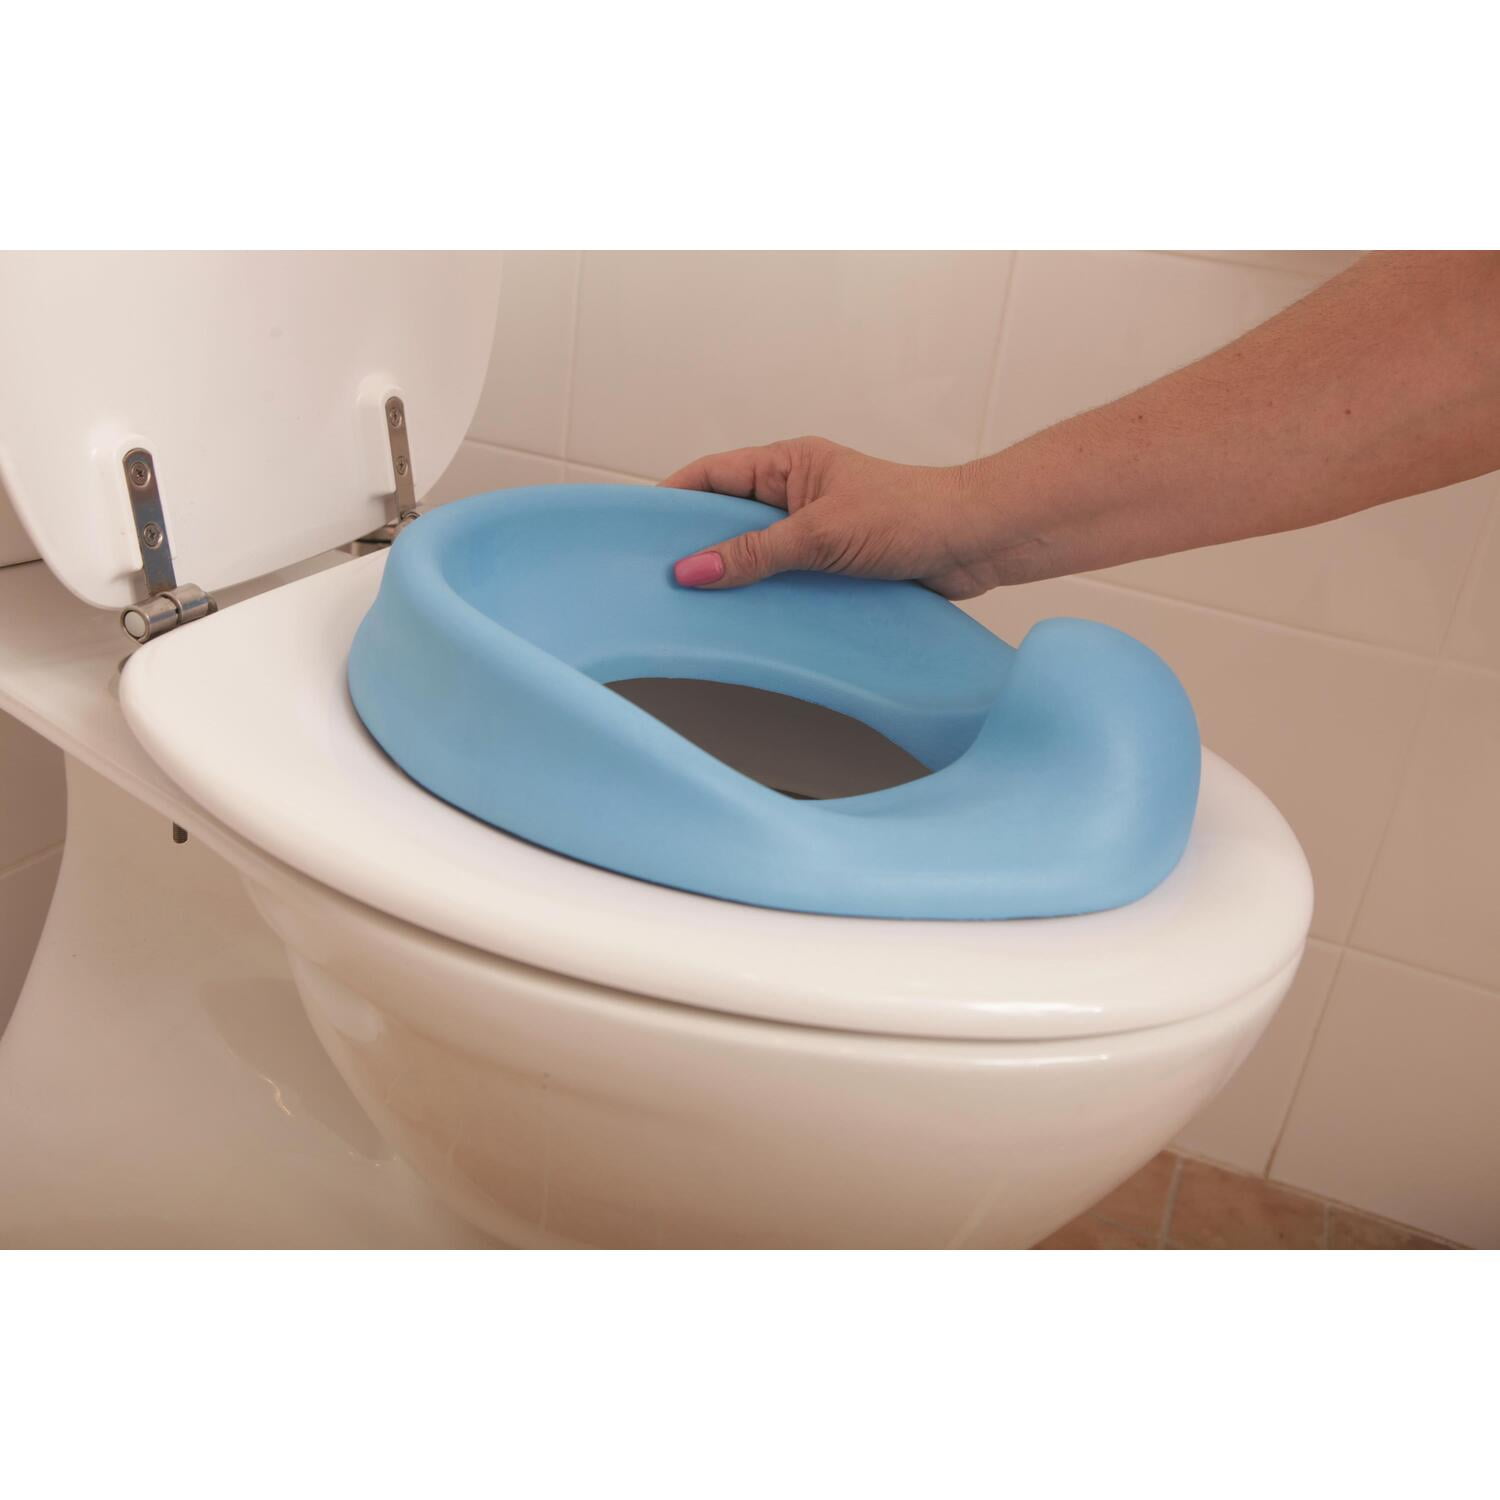 The potty training seat – Cariboo Distribution